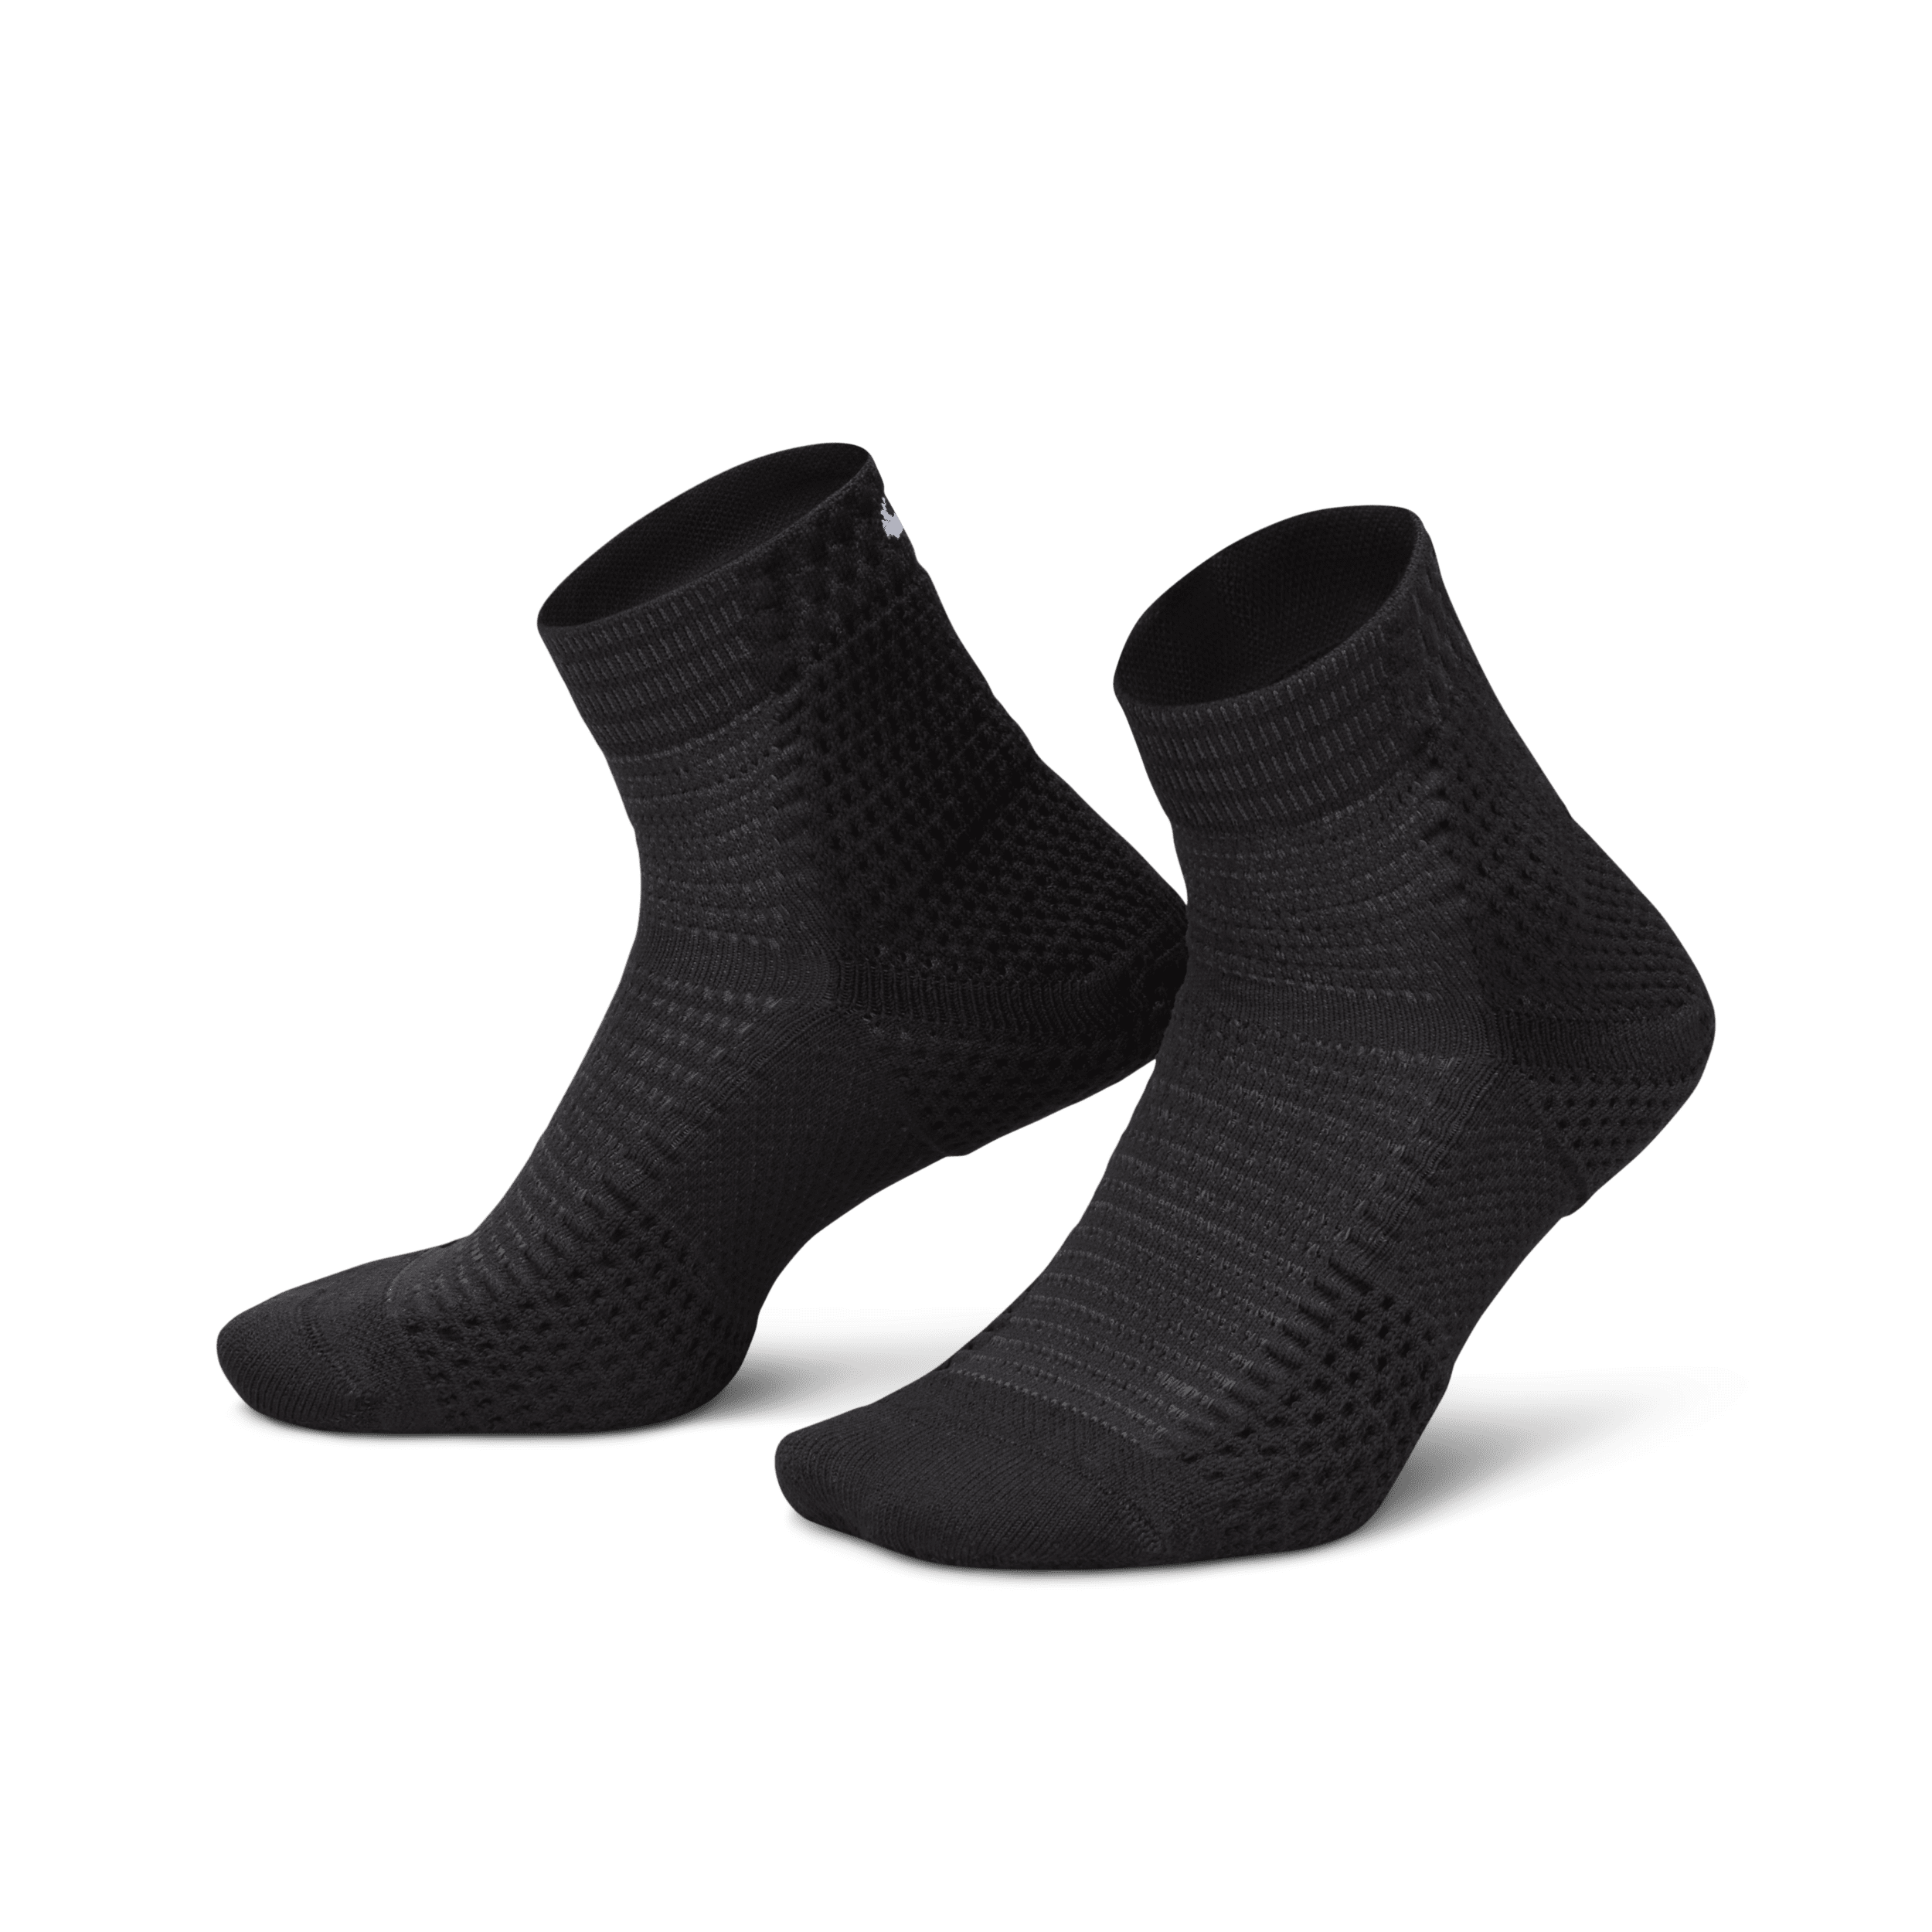 Nike Unicorn Dri-FIT ADV enkelsokken met demping (1 paar) - Zwart